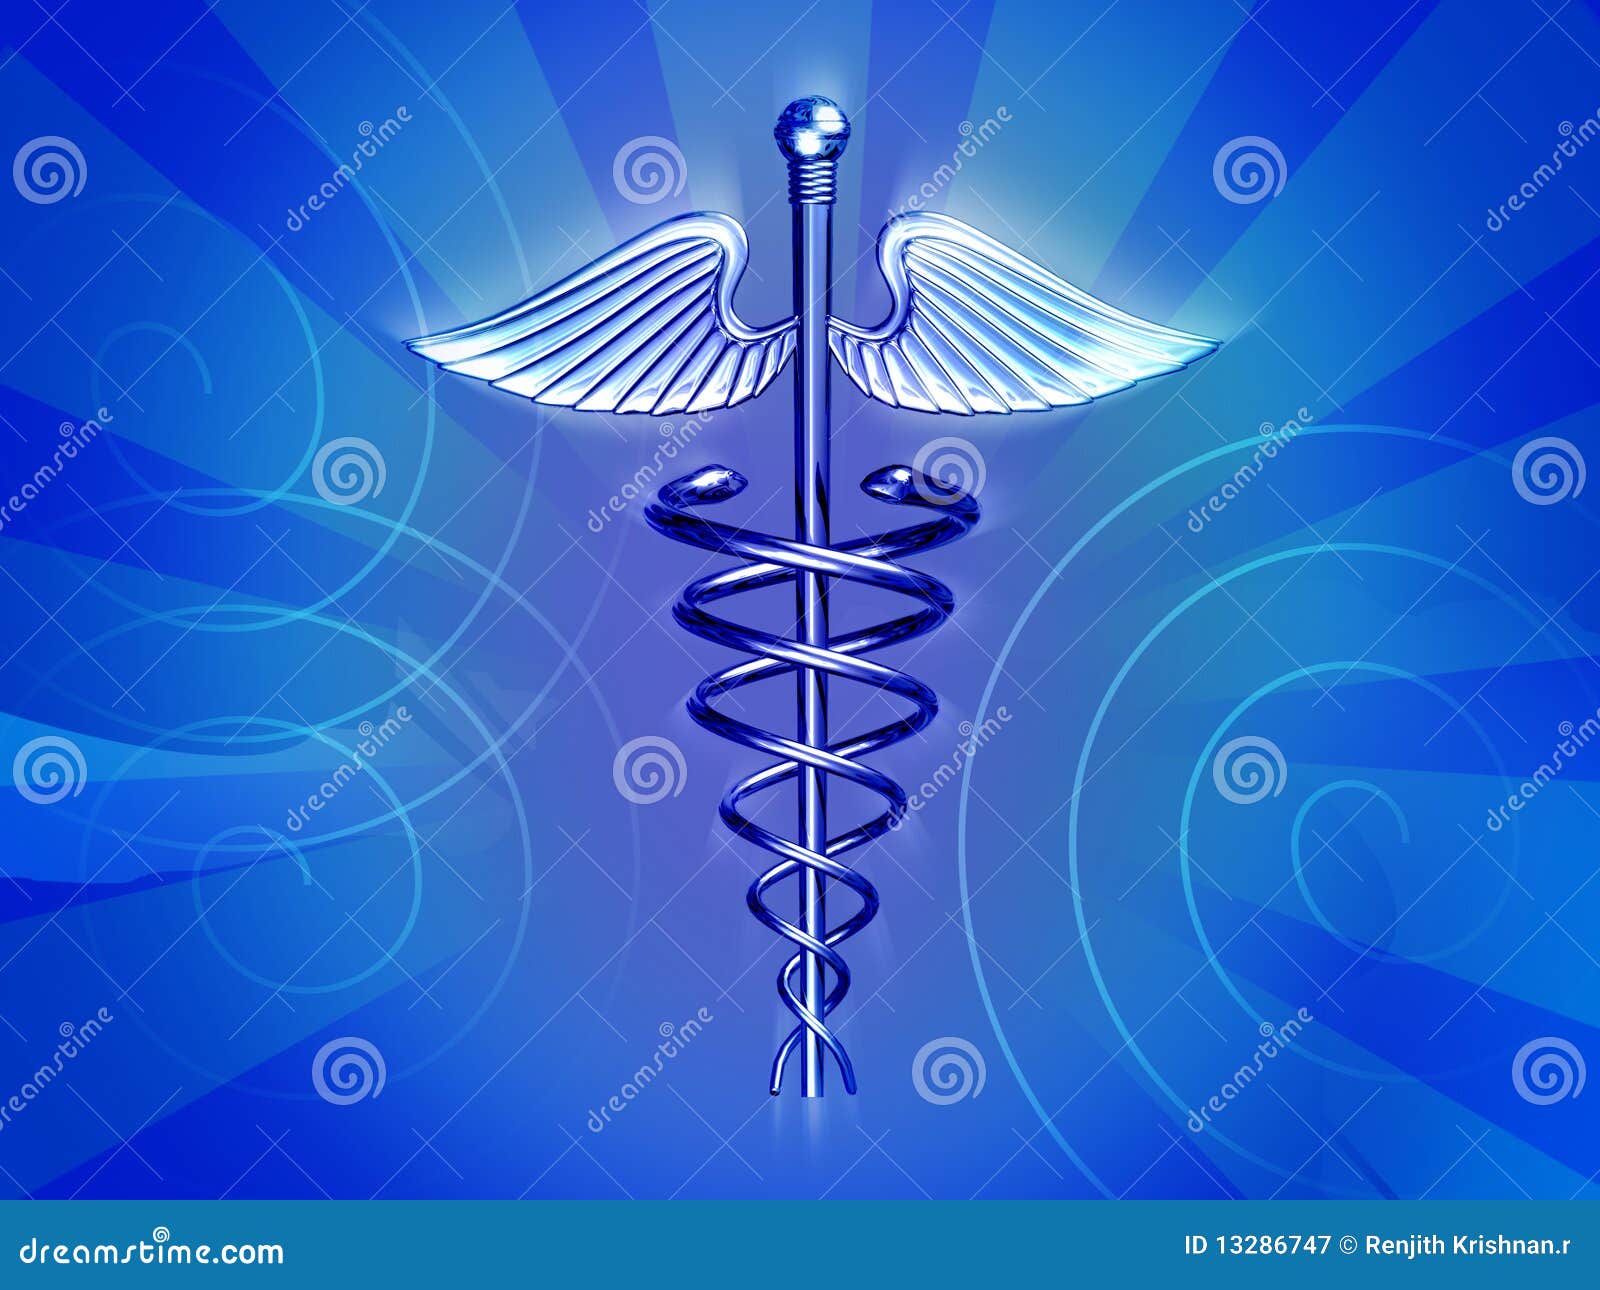 Medical logo stock illustration. Illustration of medical - 13286747